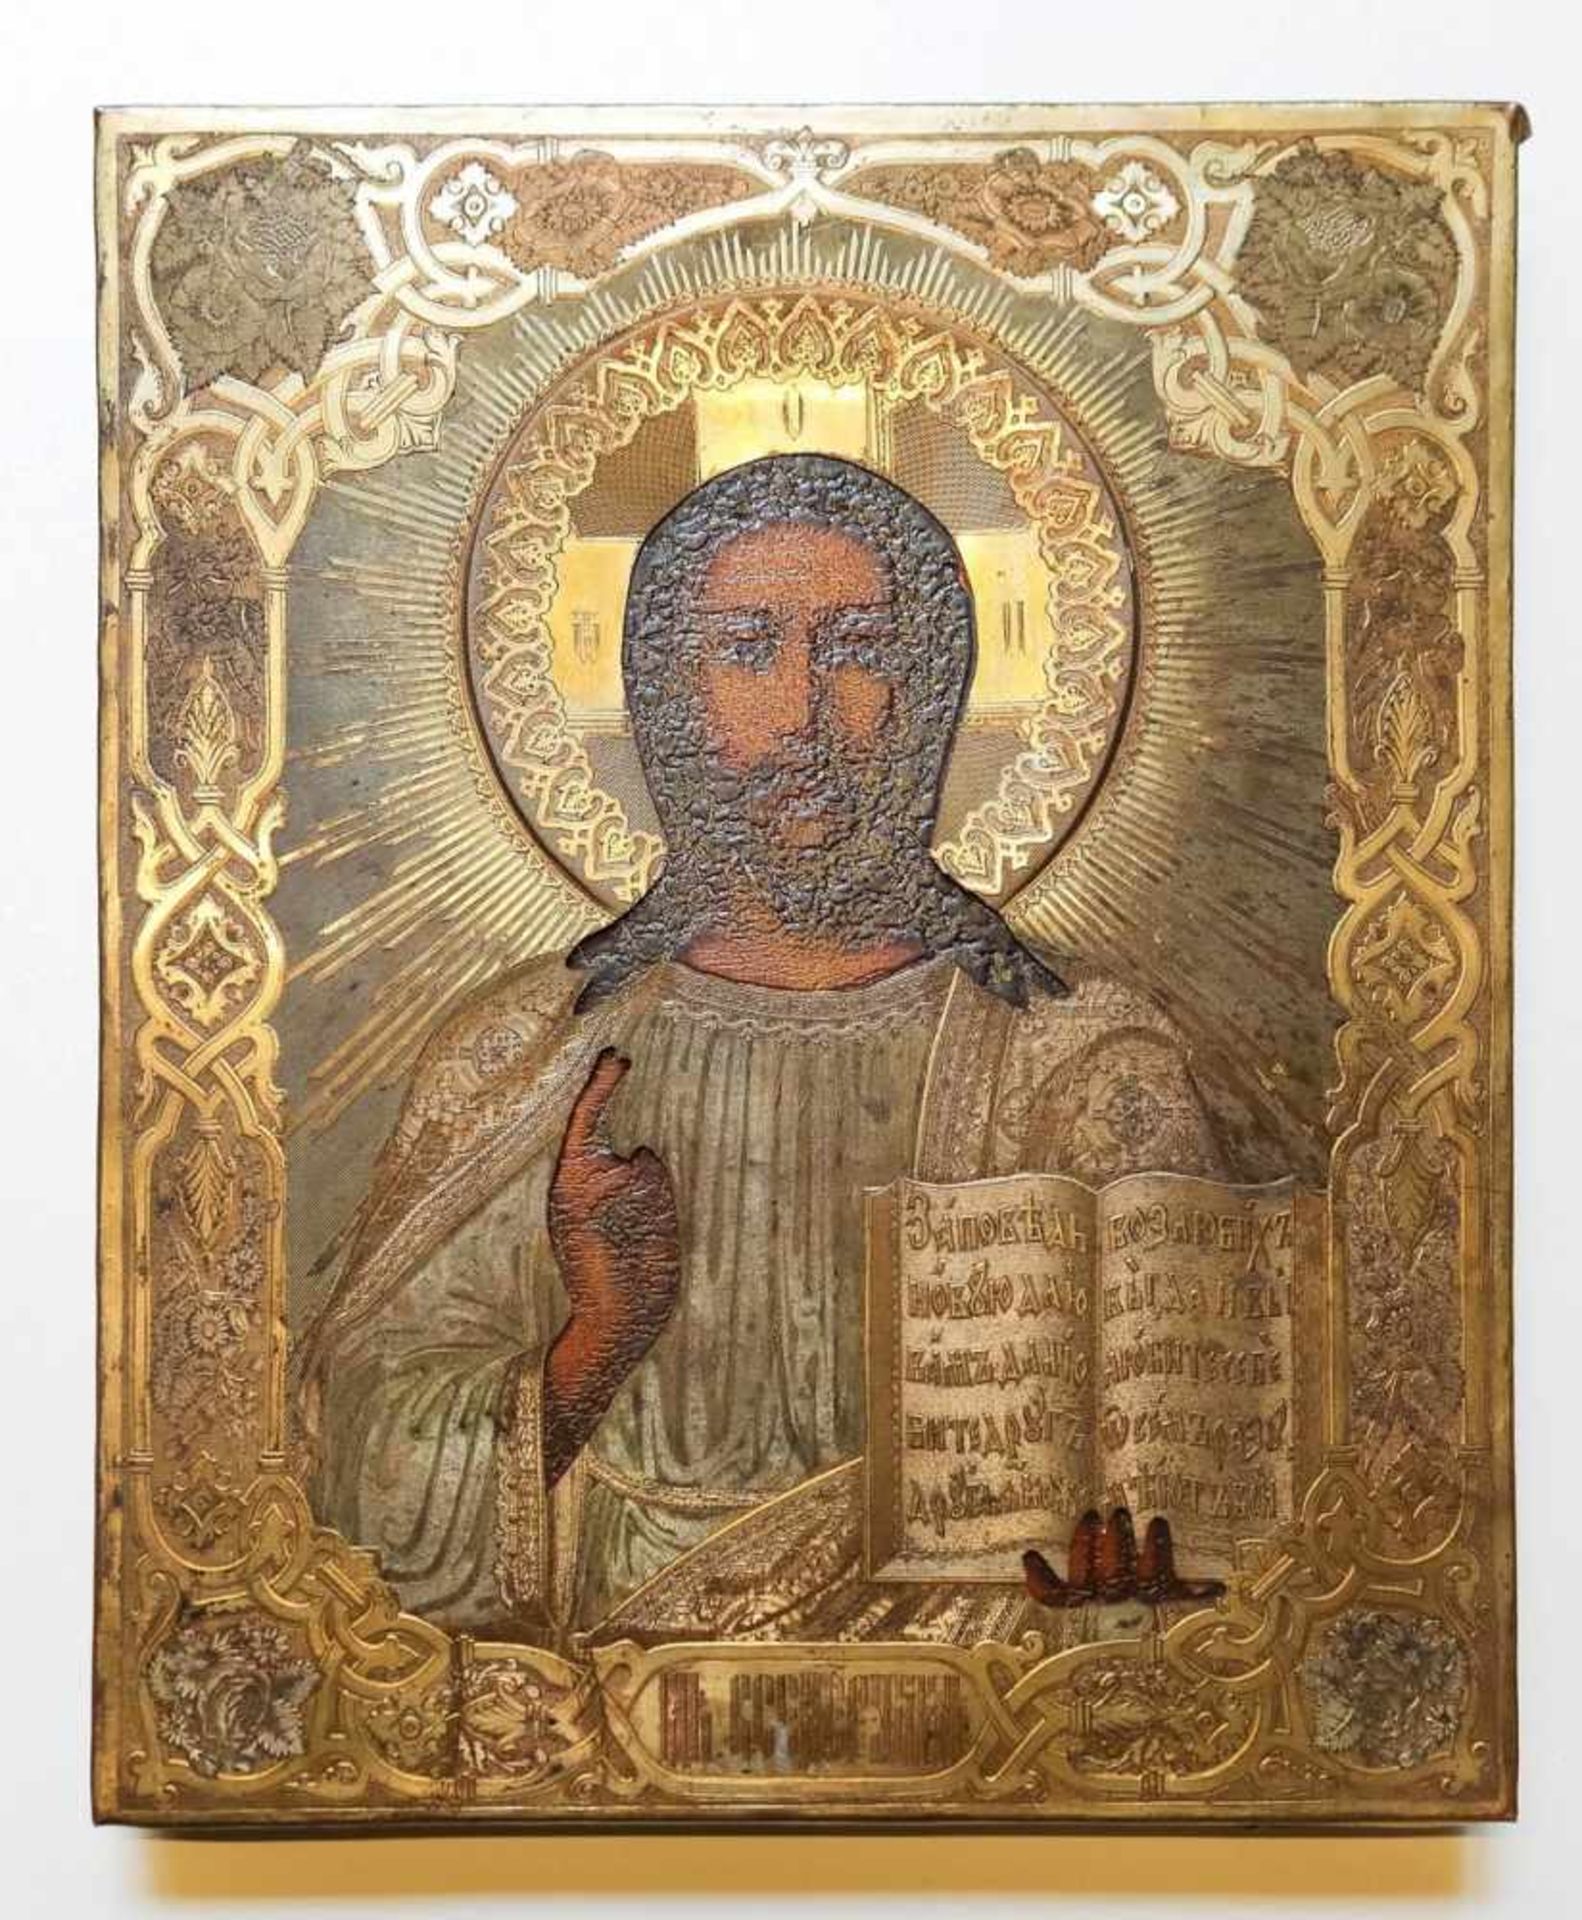 Christus PantokratorRusslandRiza. 27×22 cm.(52053)- - -20.00 % buyer's premium on the hammer